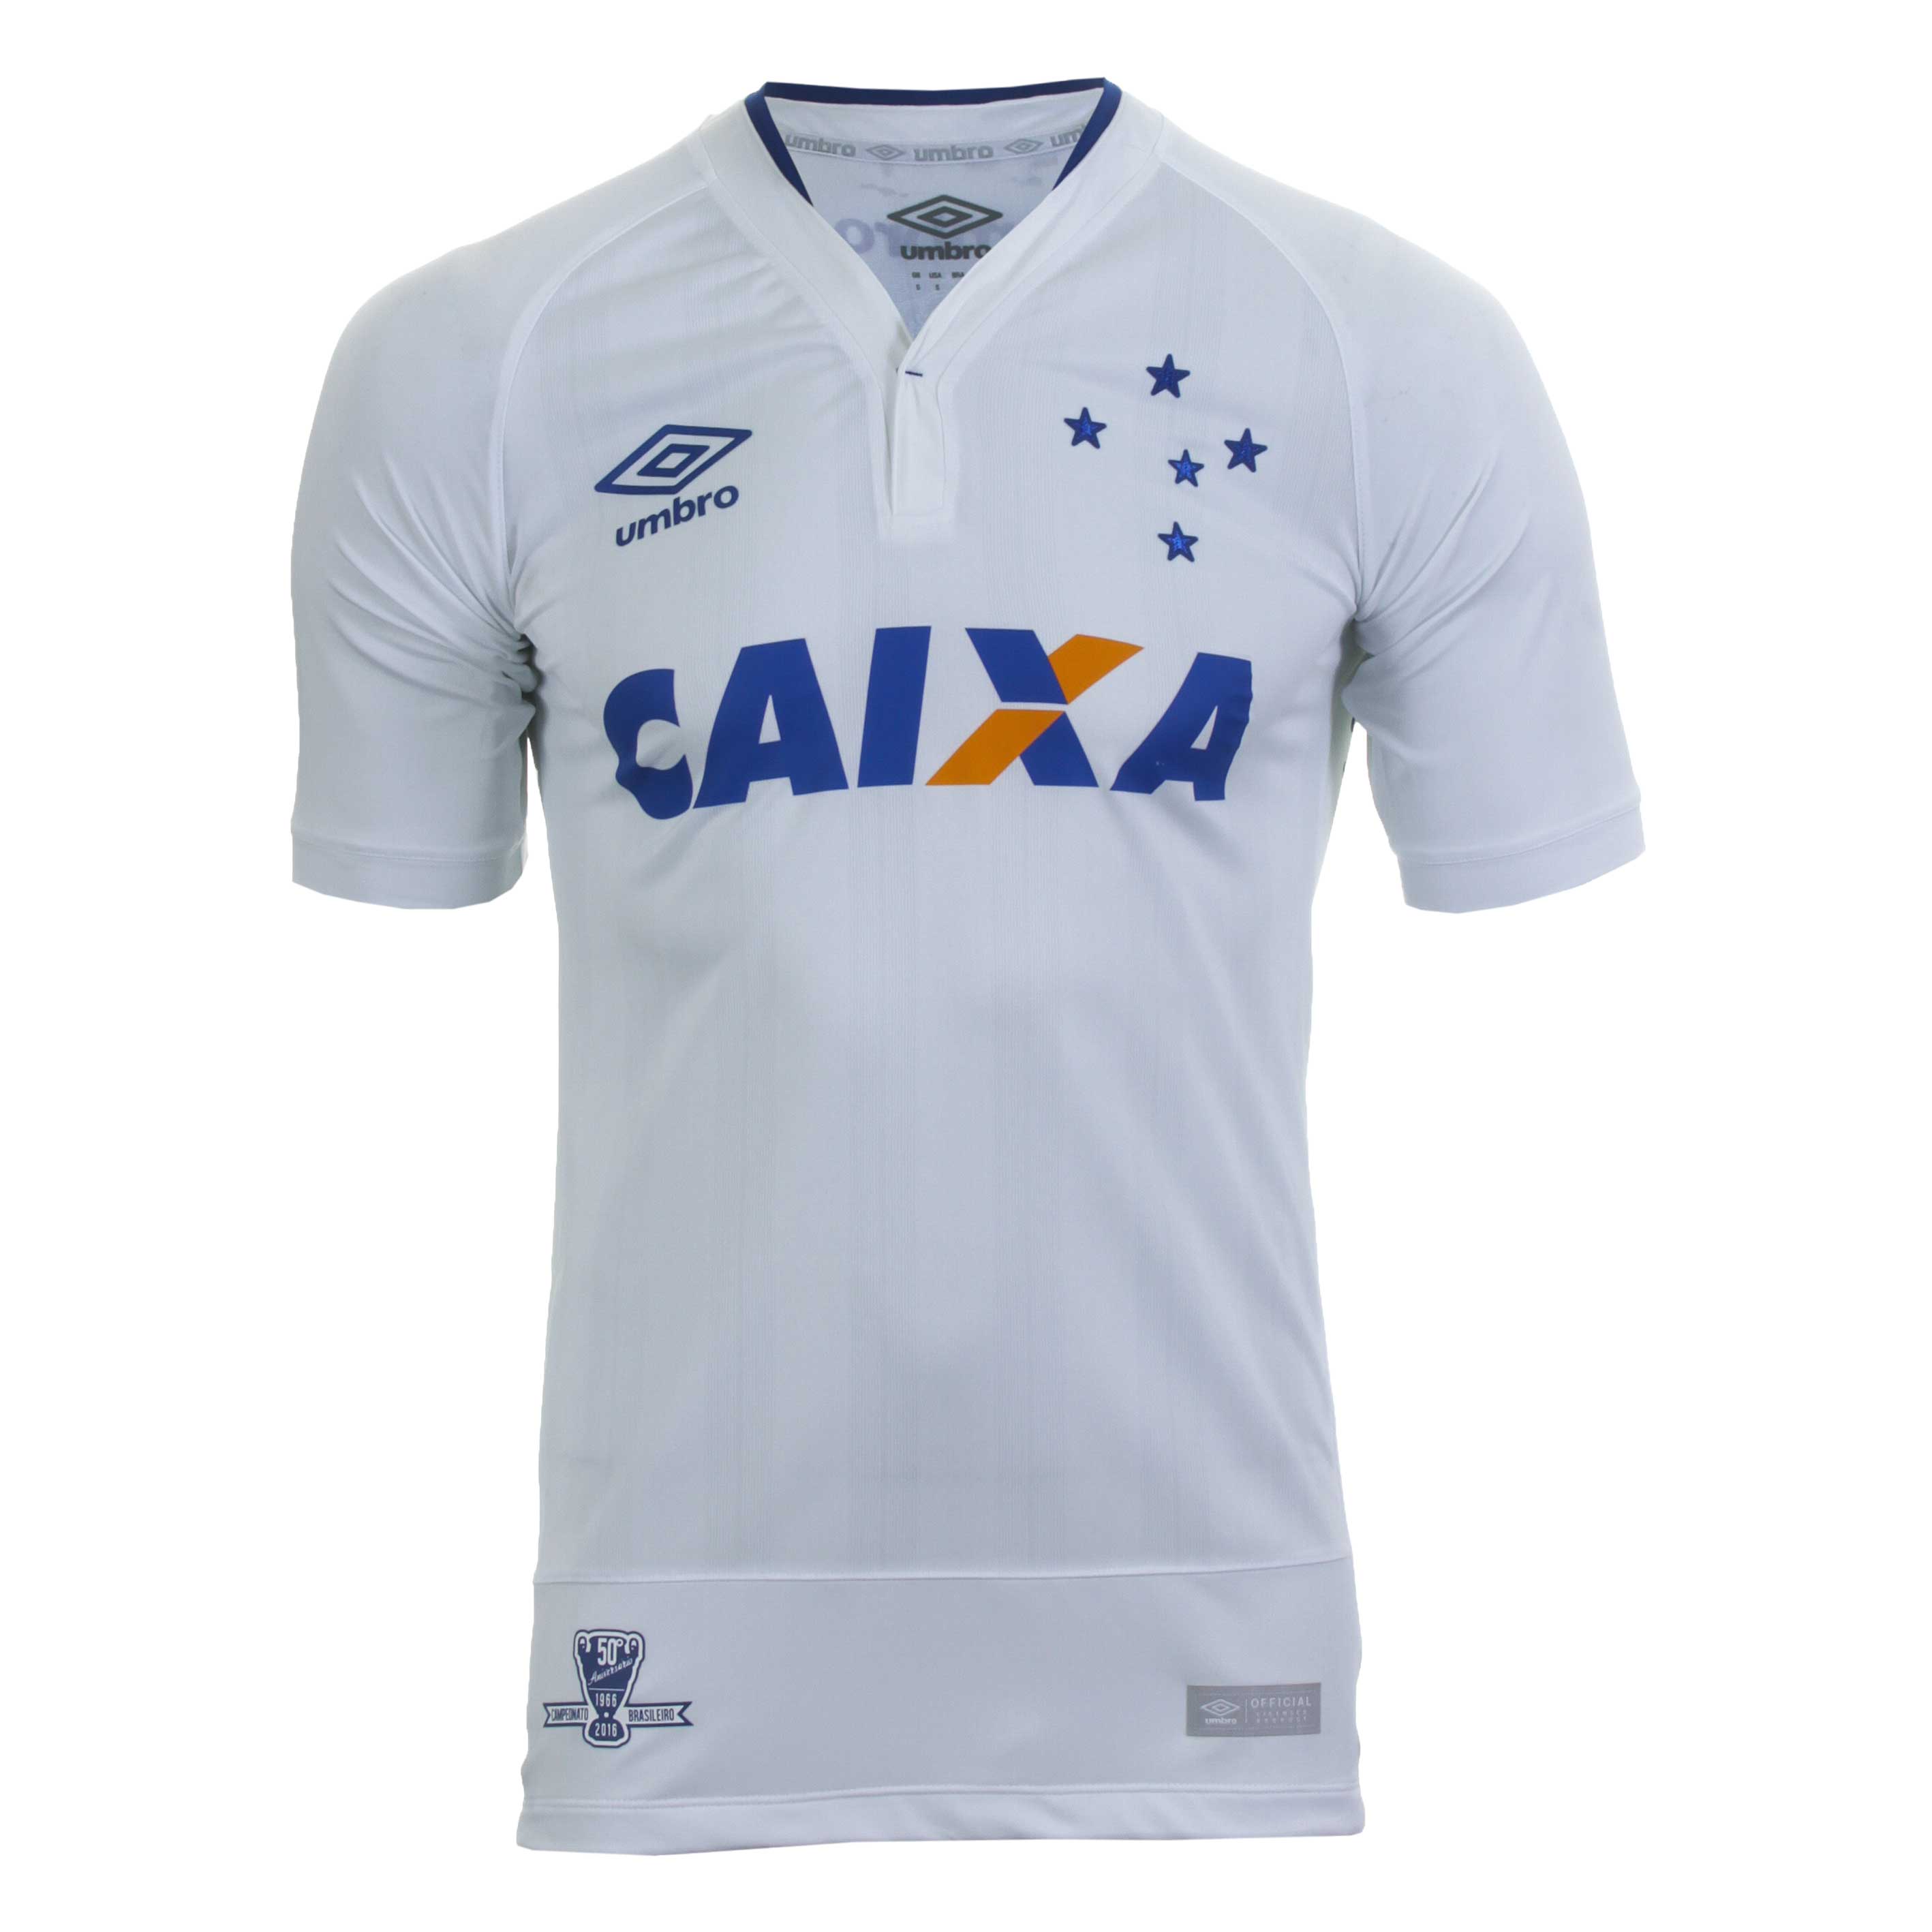 Camiseta Fem. Umbro Cruzeiro Of 2016 W - Branco/Azul